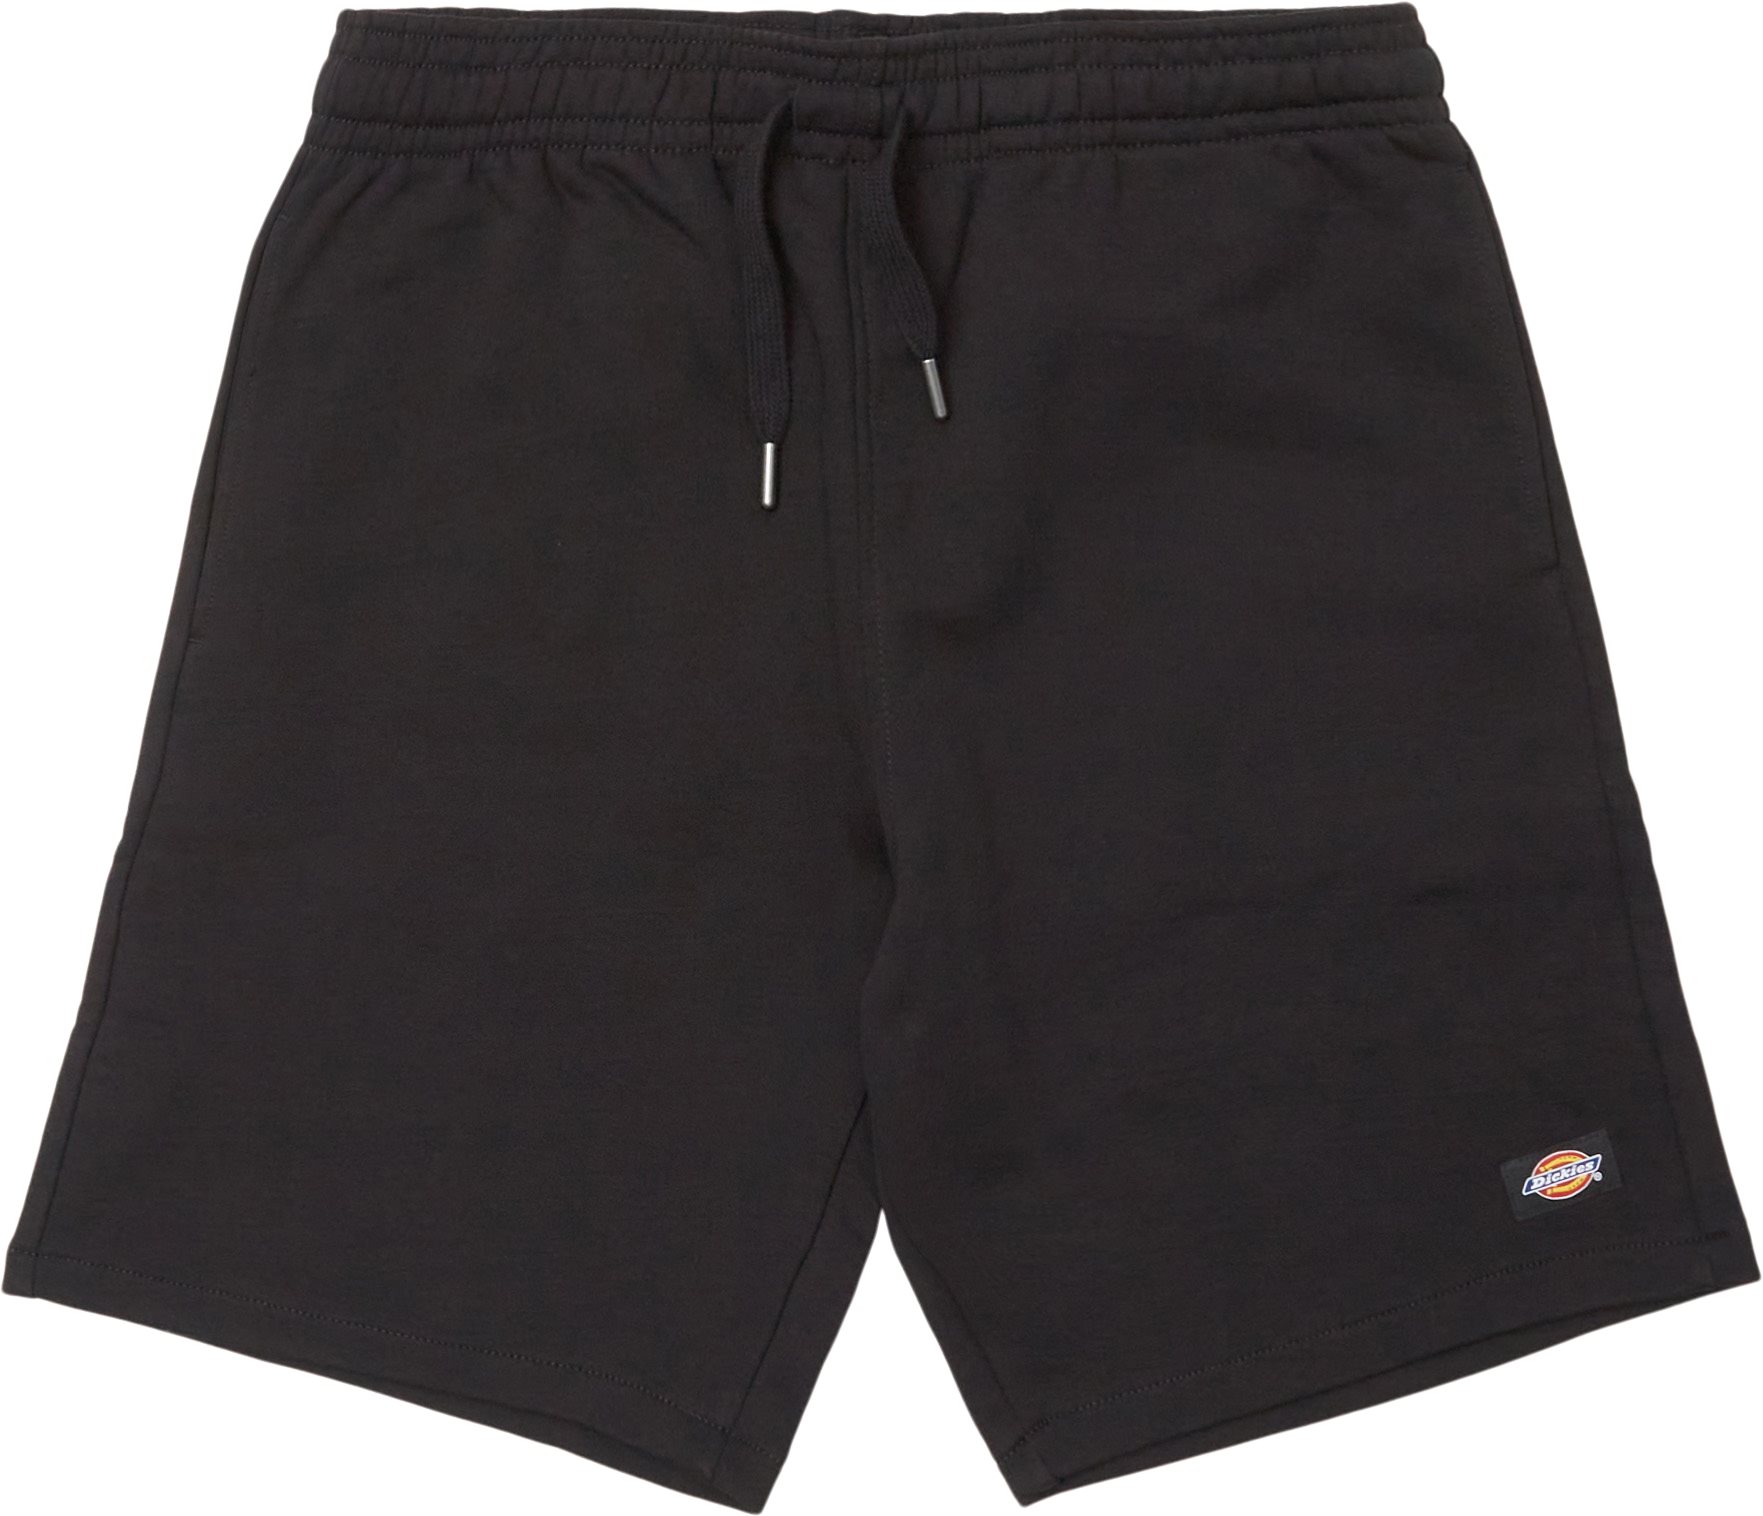 Champlin sweatshorts - Shorts - Regular fit - Svart